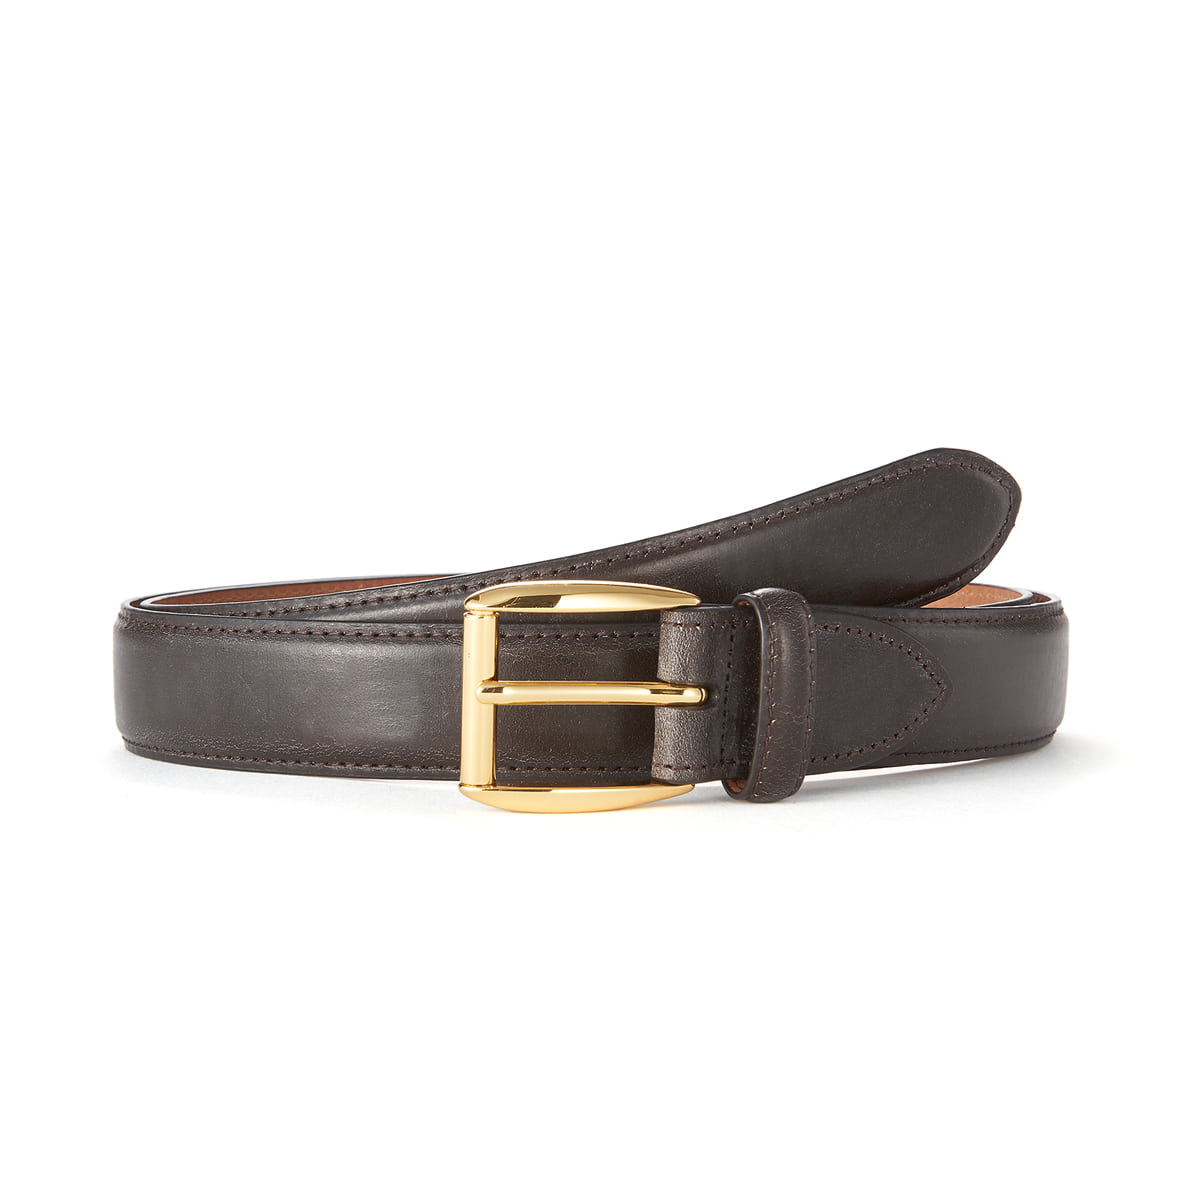 Dk brown Bridle Leather Belt (Gold Buckle)